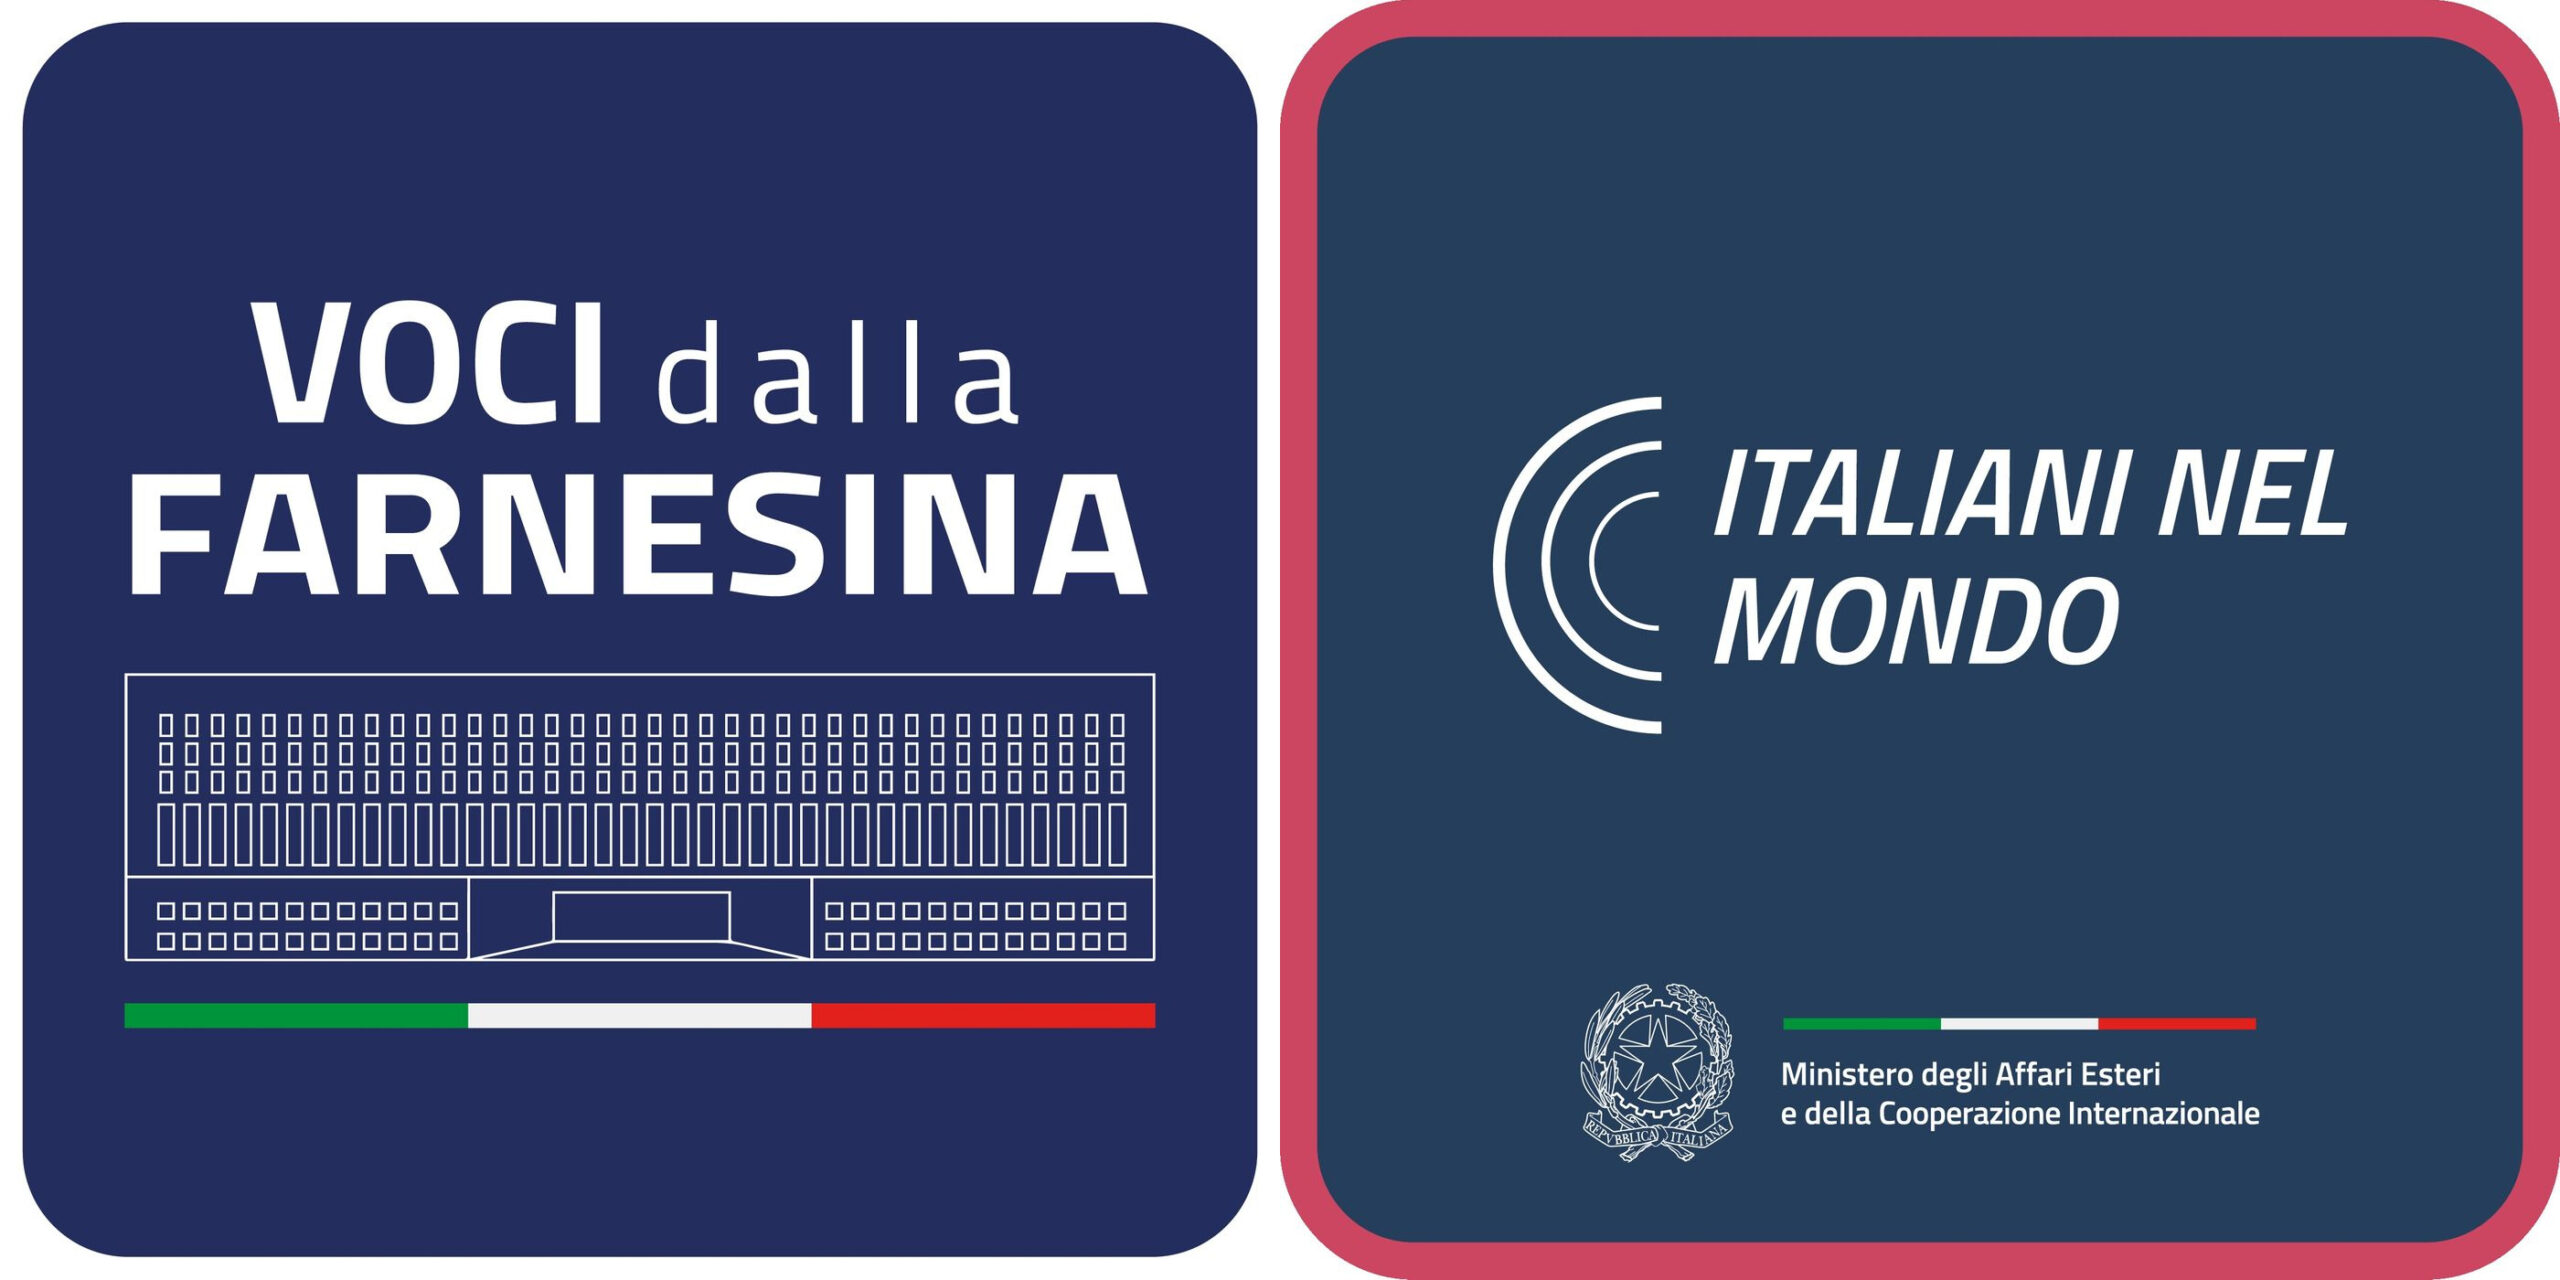 Raskorak između logotipa "Voci della Farnesina" i "Italiani nel mondo"